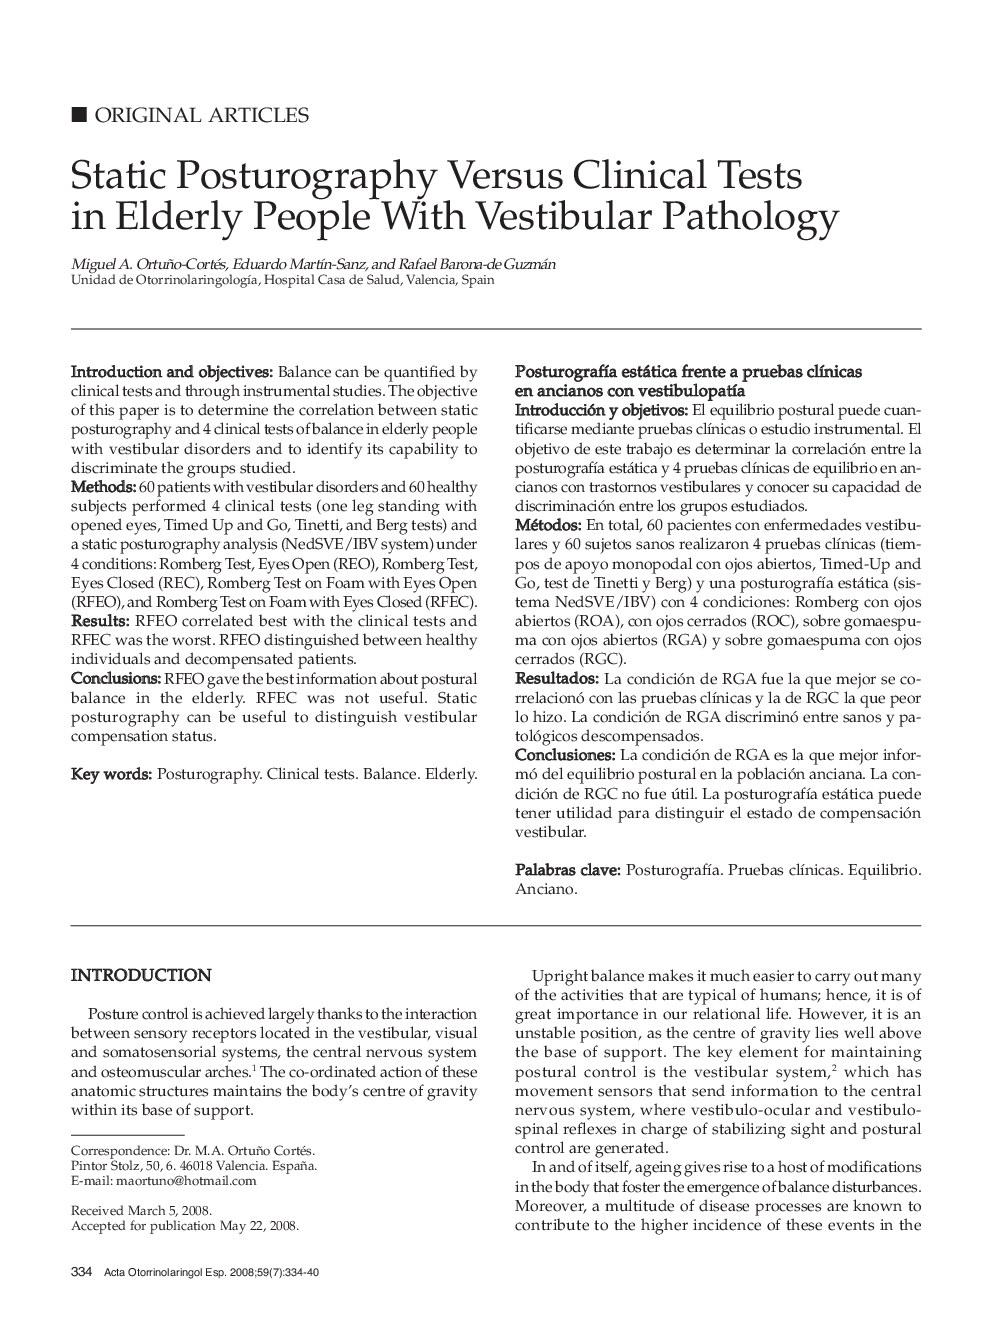 Static Posturography Versus Clinical Tests in Elderly People With Vestibular Pathology